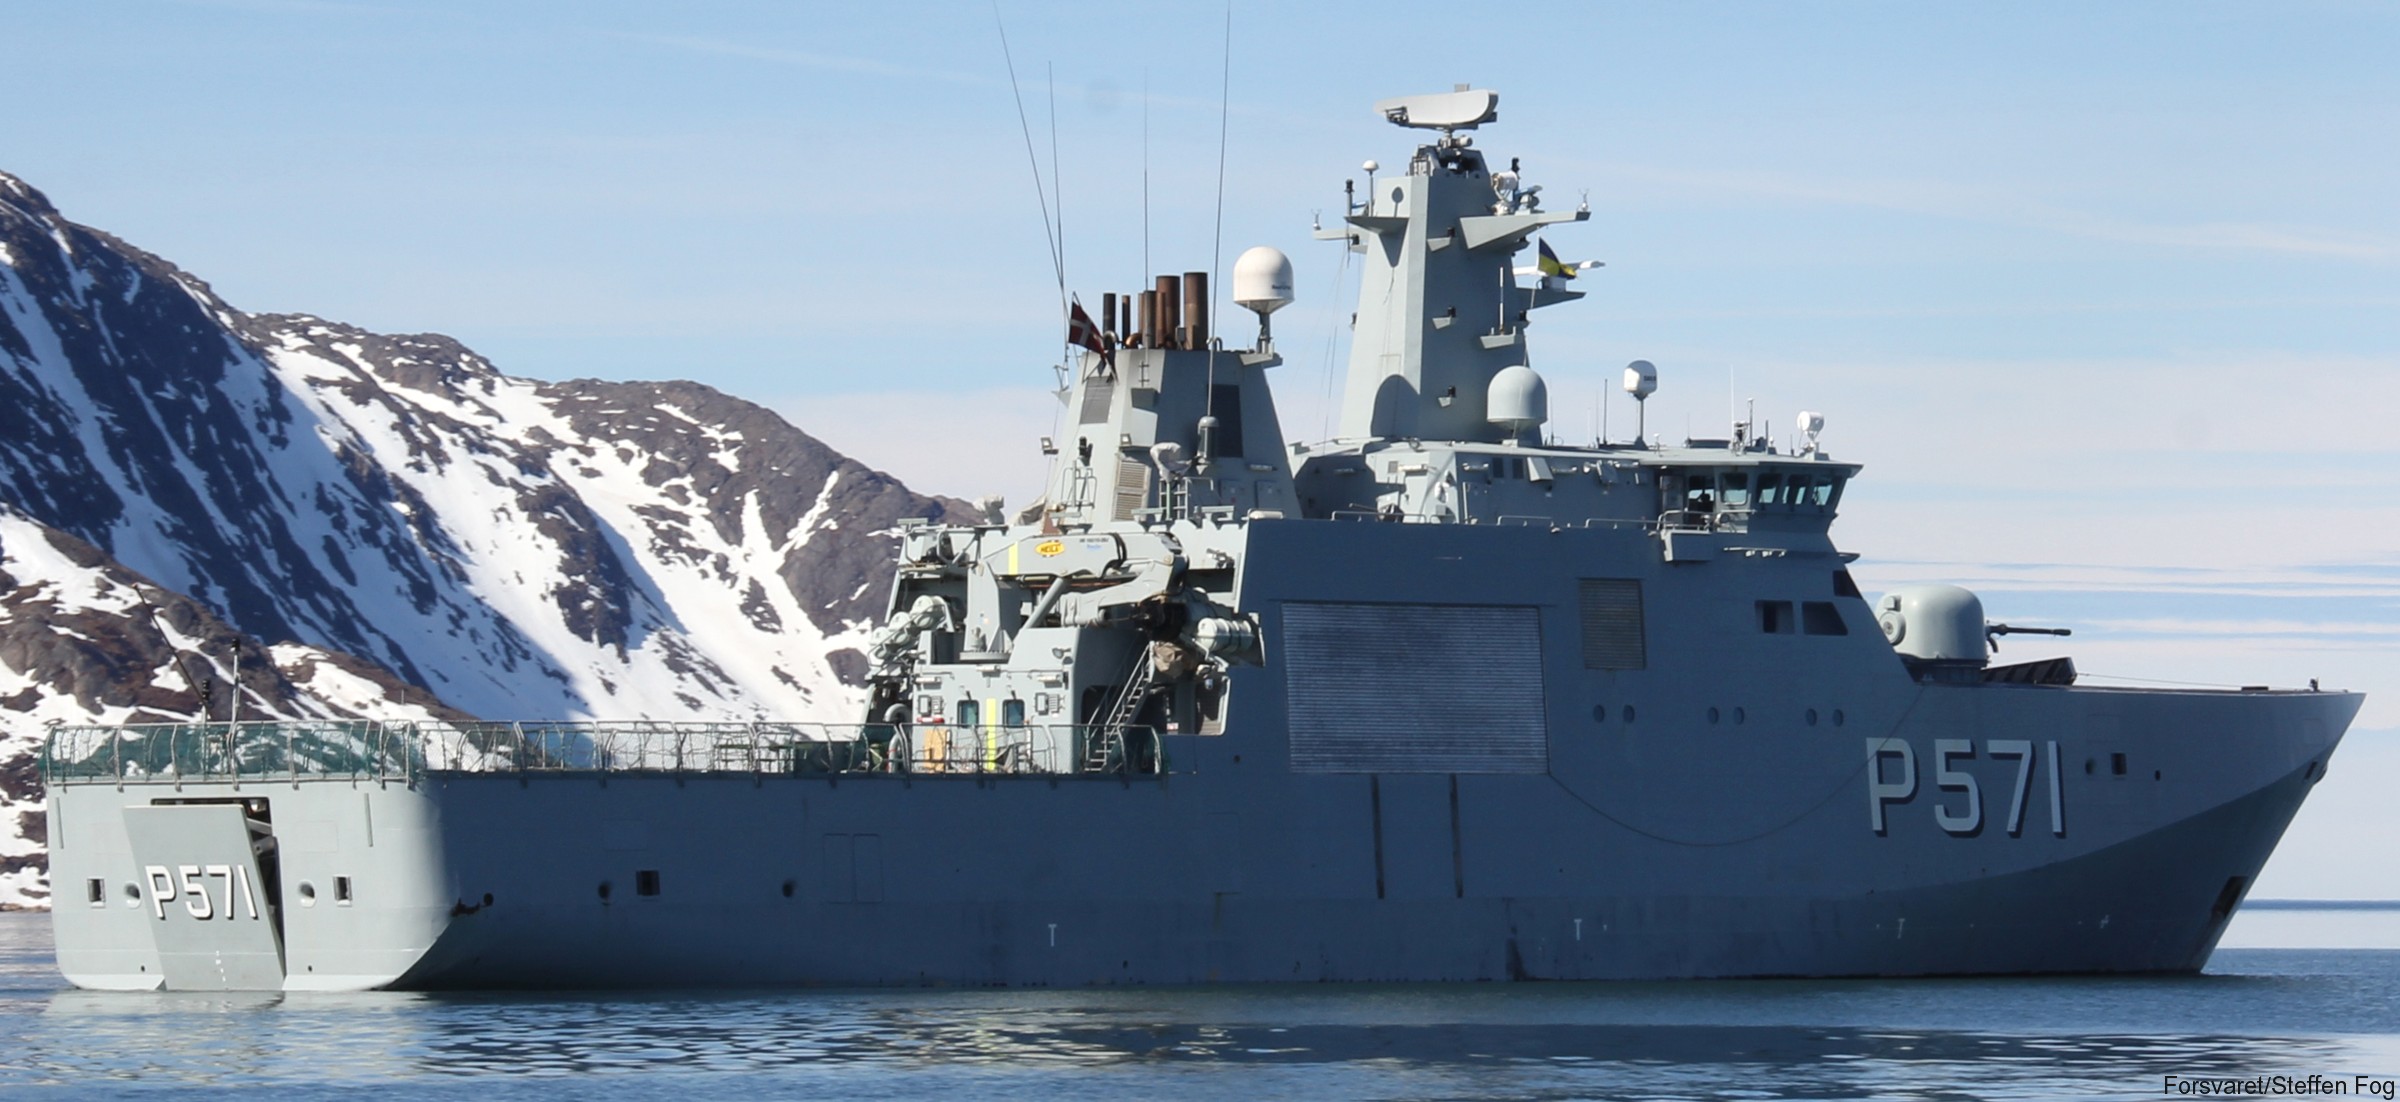 p-571 hdms ejnar mikkelsen knud rasmussen class offshore patrol vessel opv royal danish navy inspektionsfartøj 11